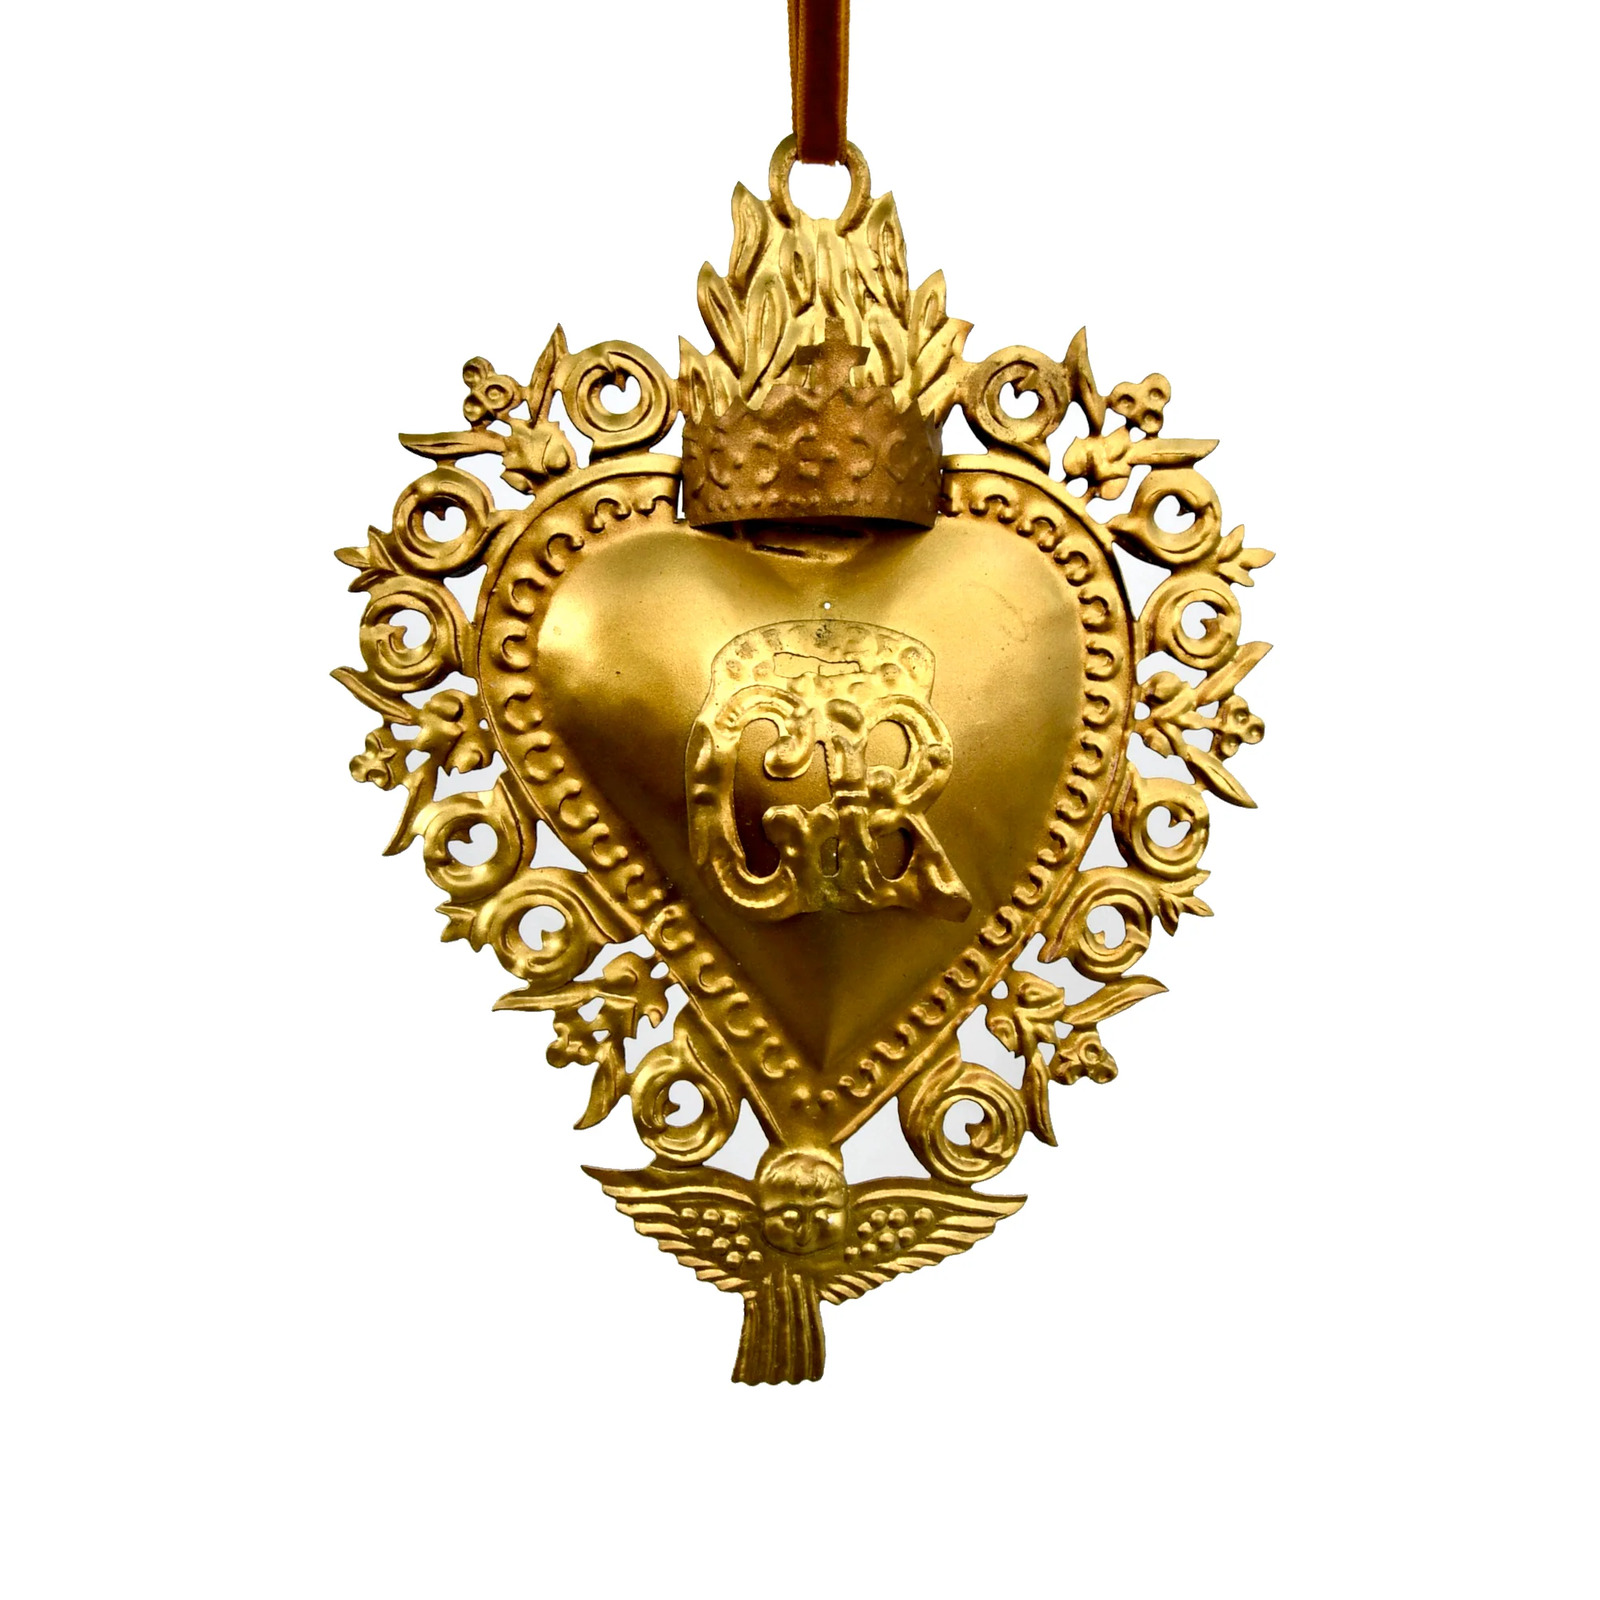 6.5in Crowned Gratia Sacred Heart Ex Voto Milagro Ornament, Antiqued Gold